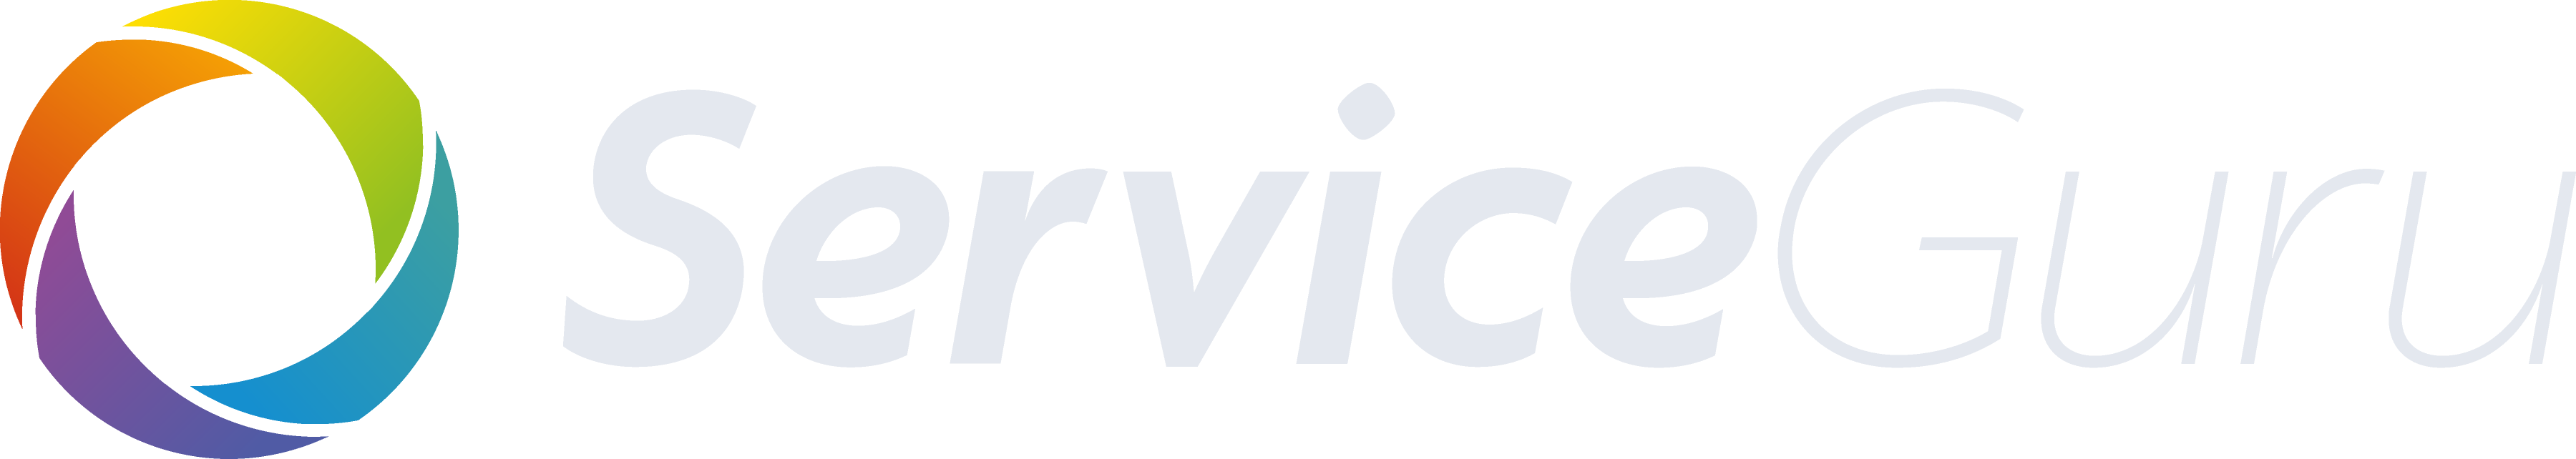 ServiceGuru logo